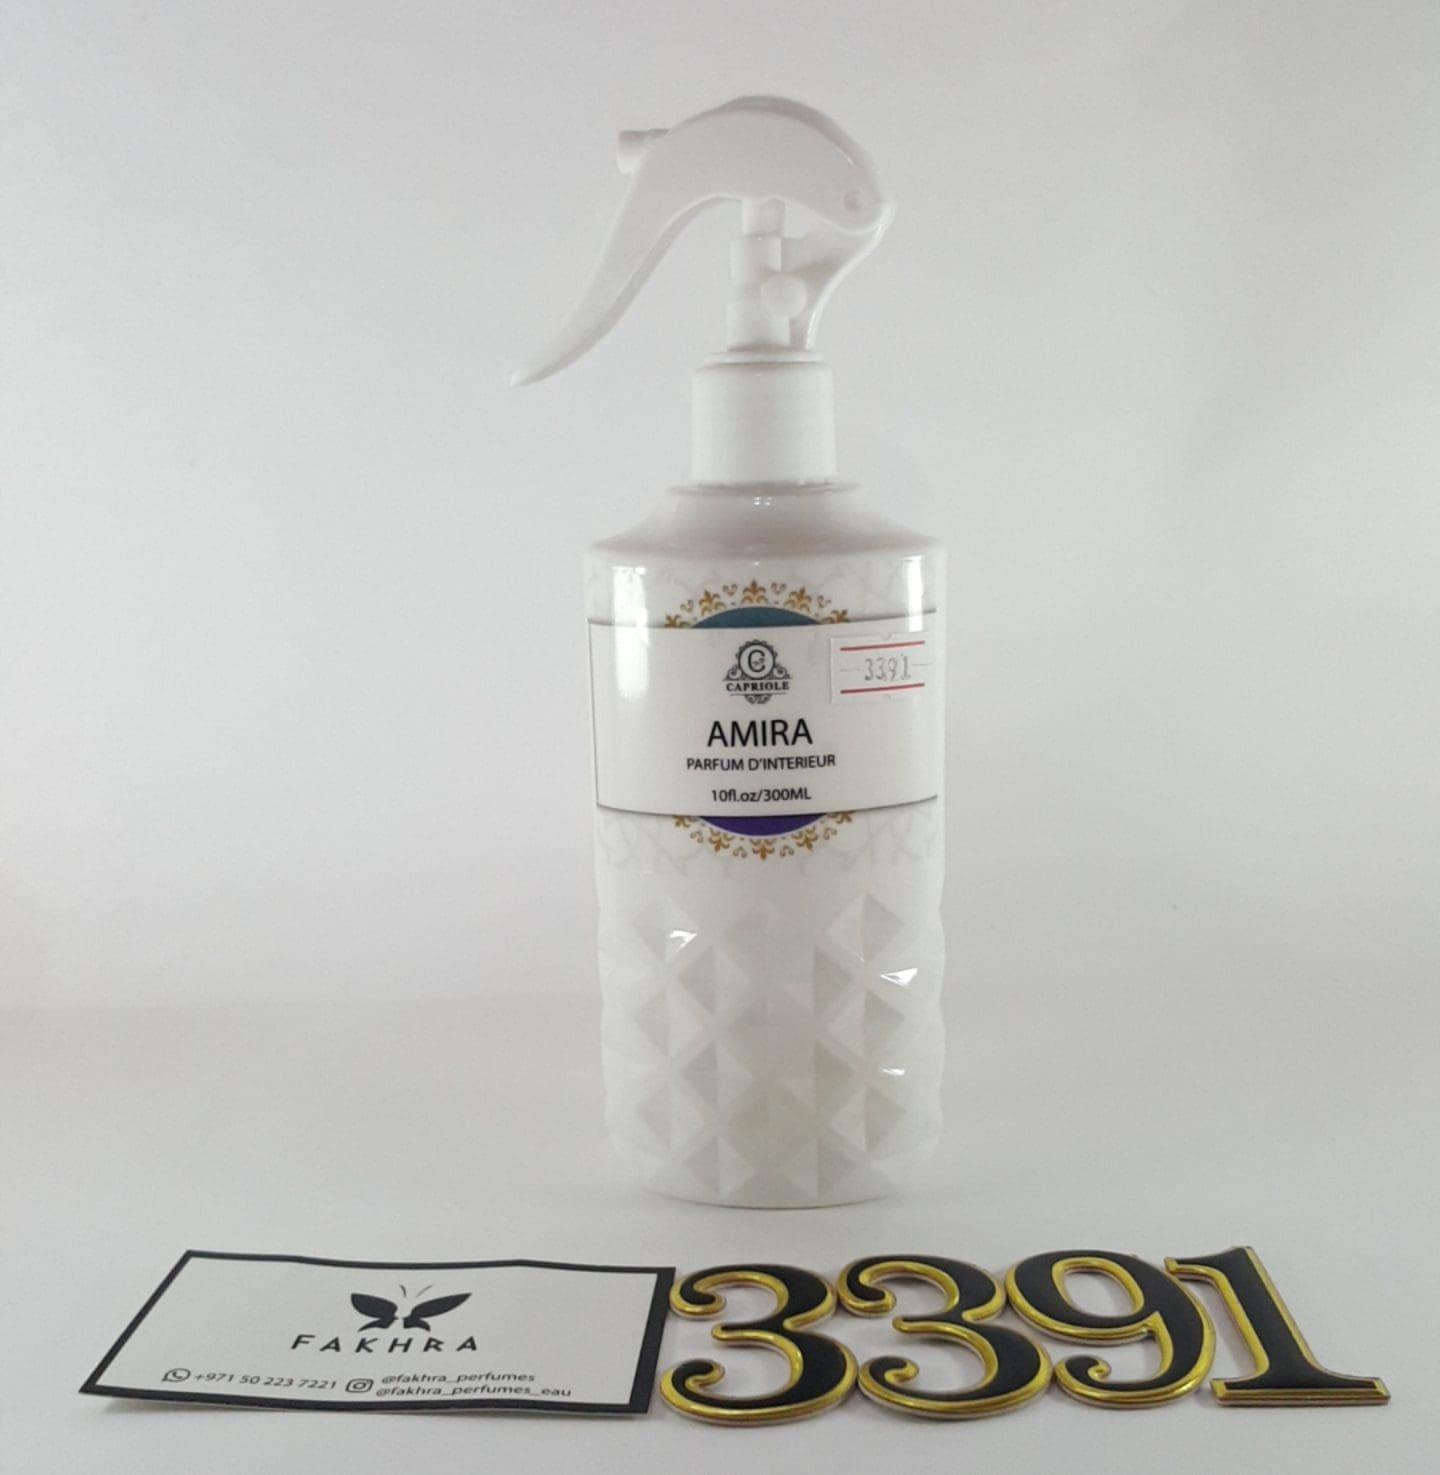 3391 Capriole AMIRA Home perfume 300ml